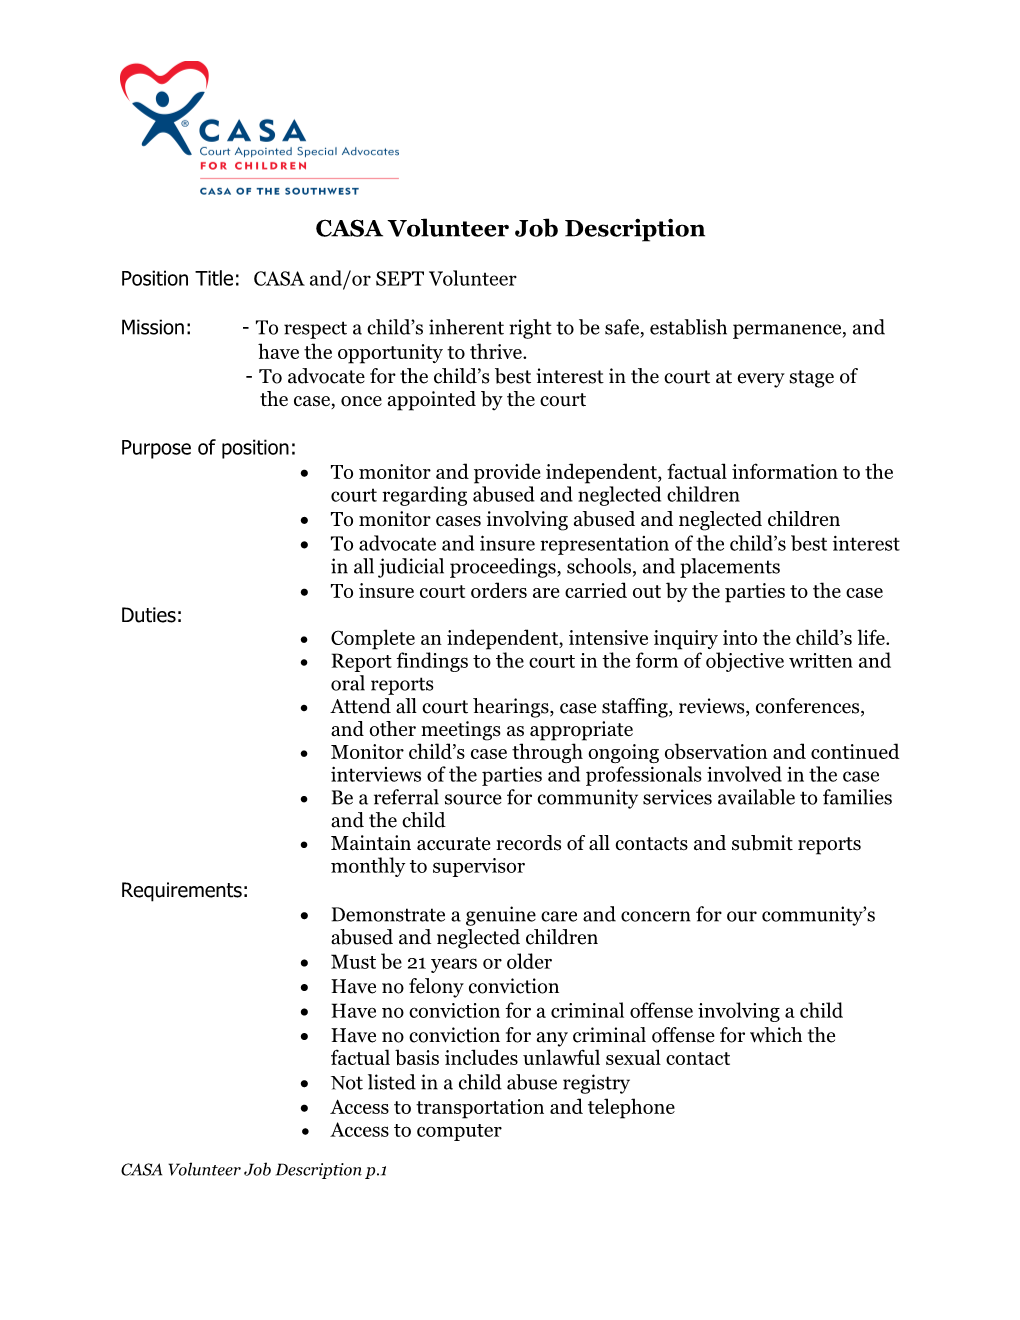 CASA Volunteer Job Description